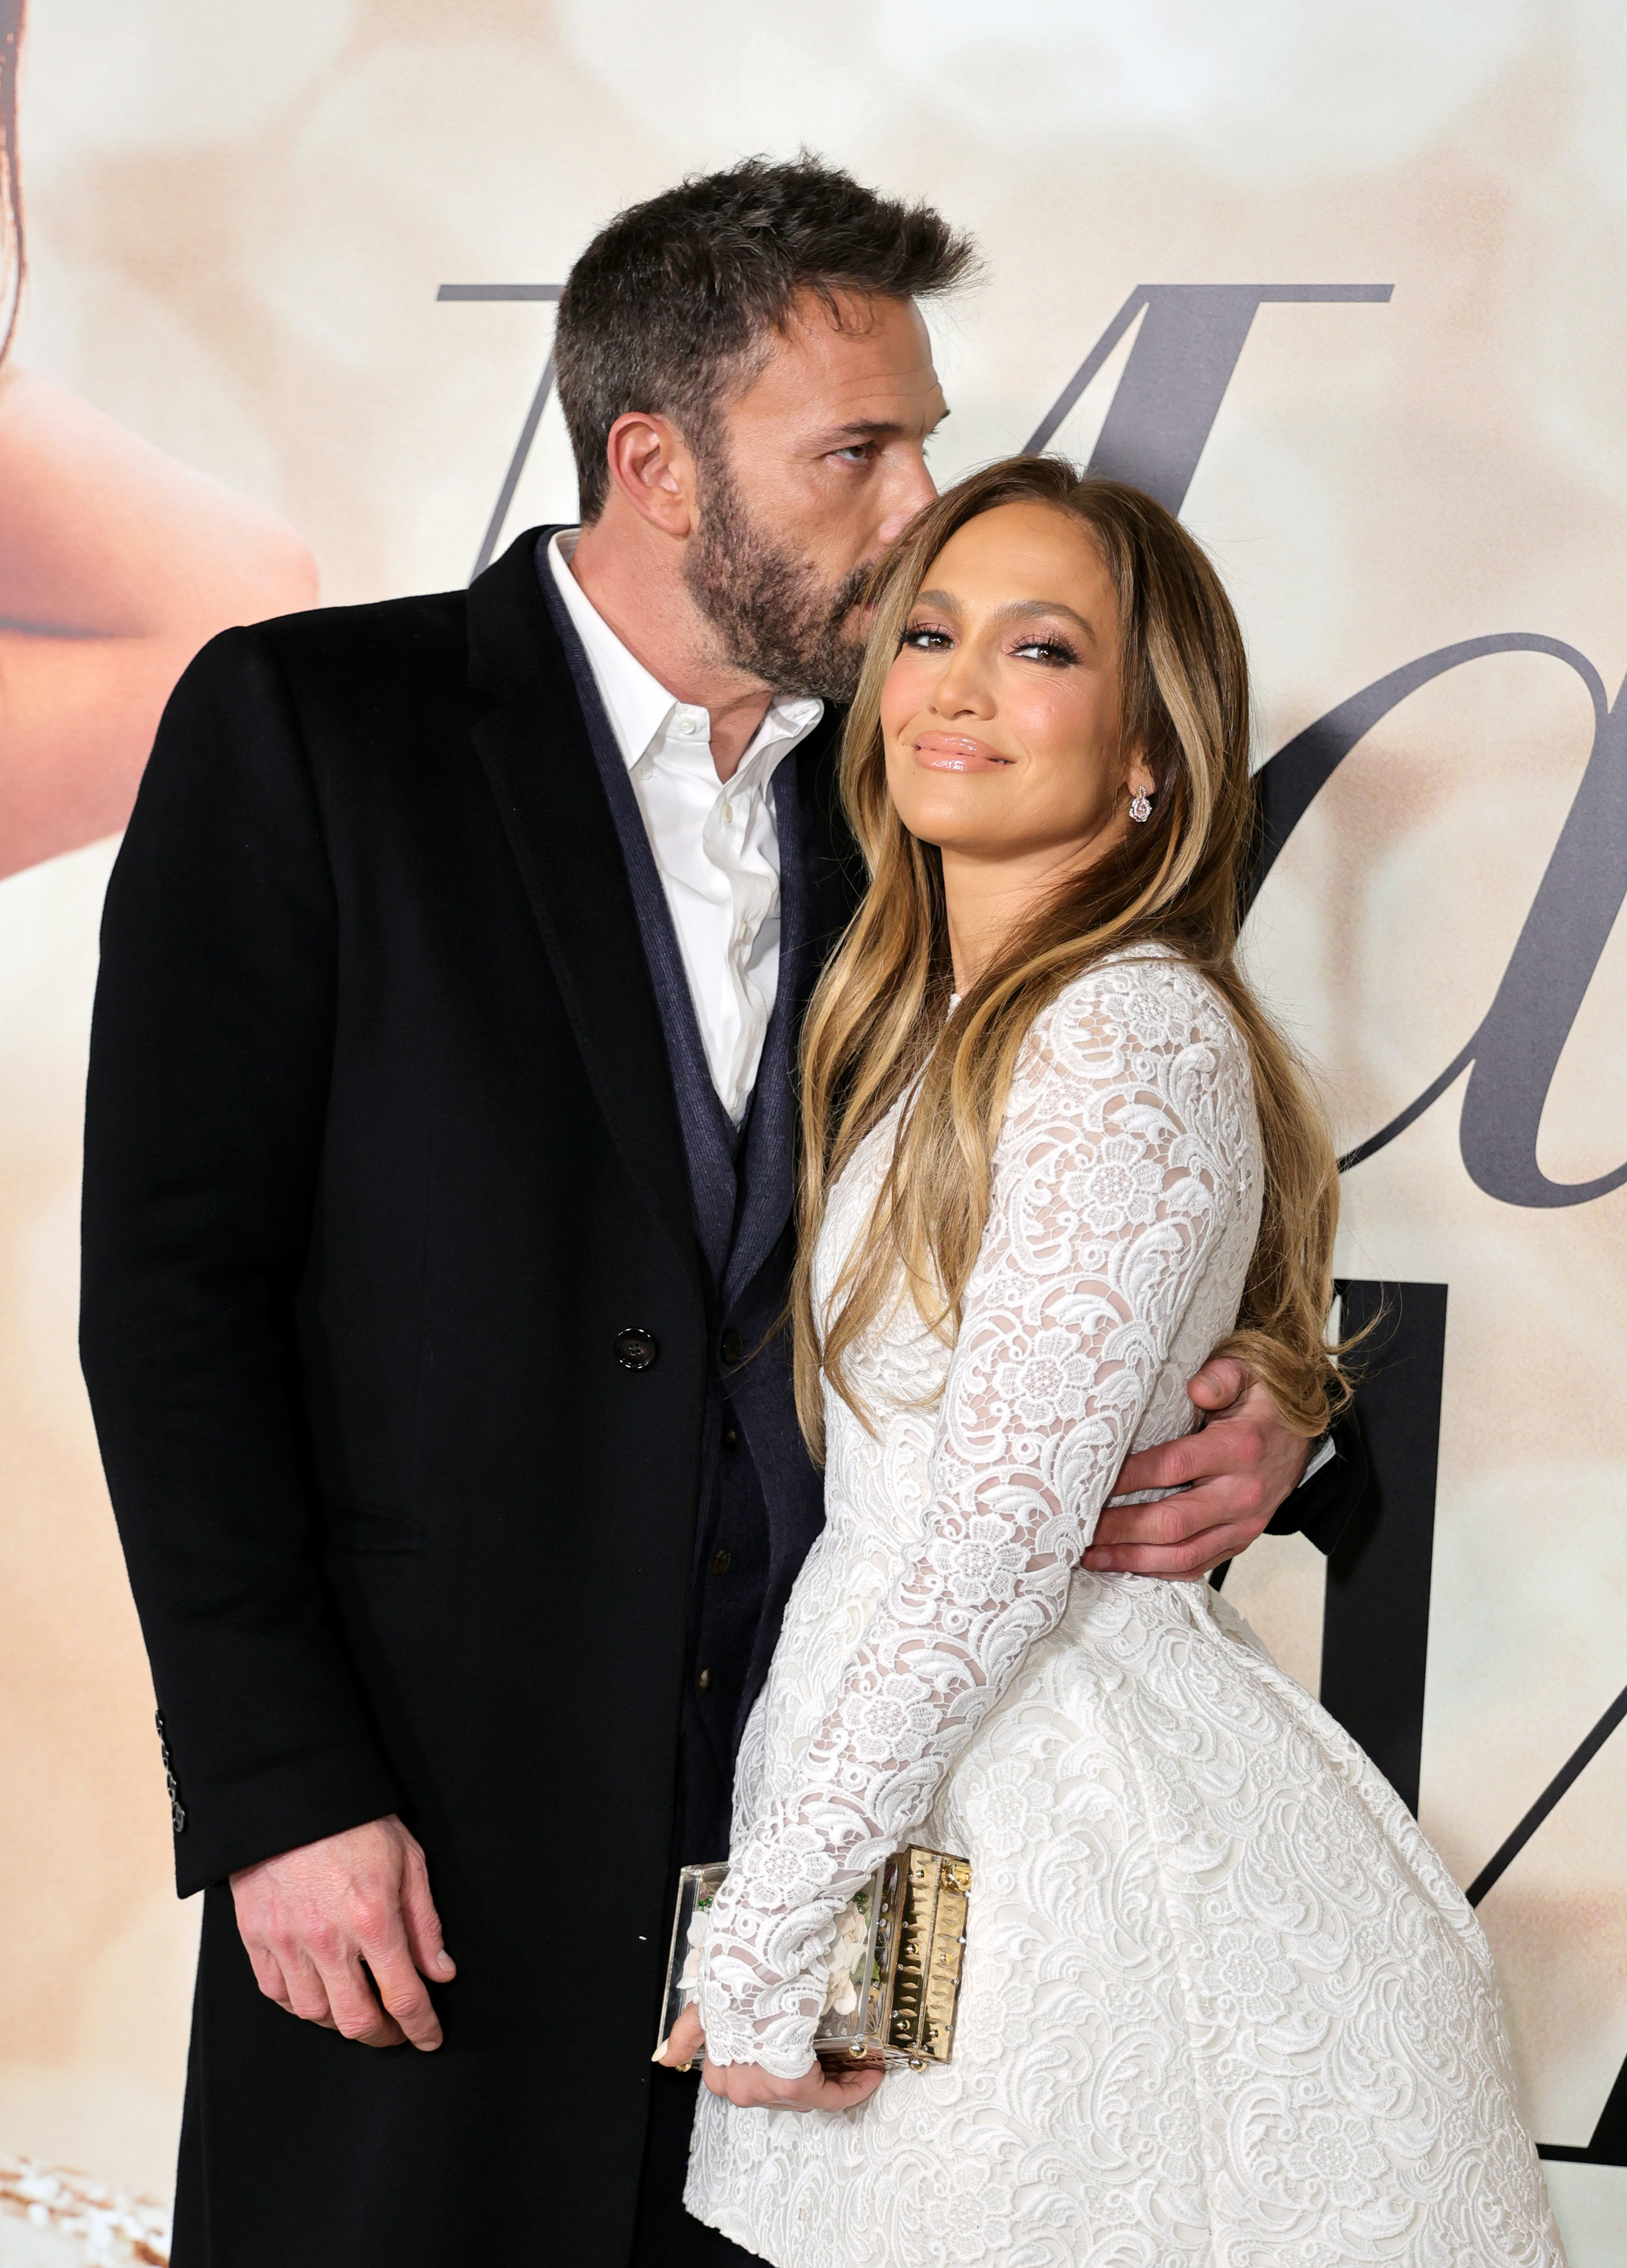 Jennifer Lopez And Ben Affleck's Wedding Behind-The-Scenes